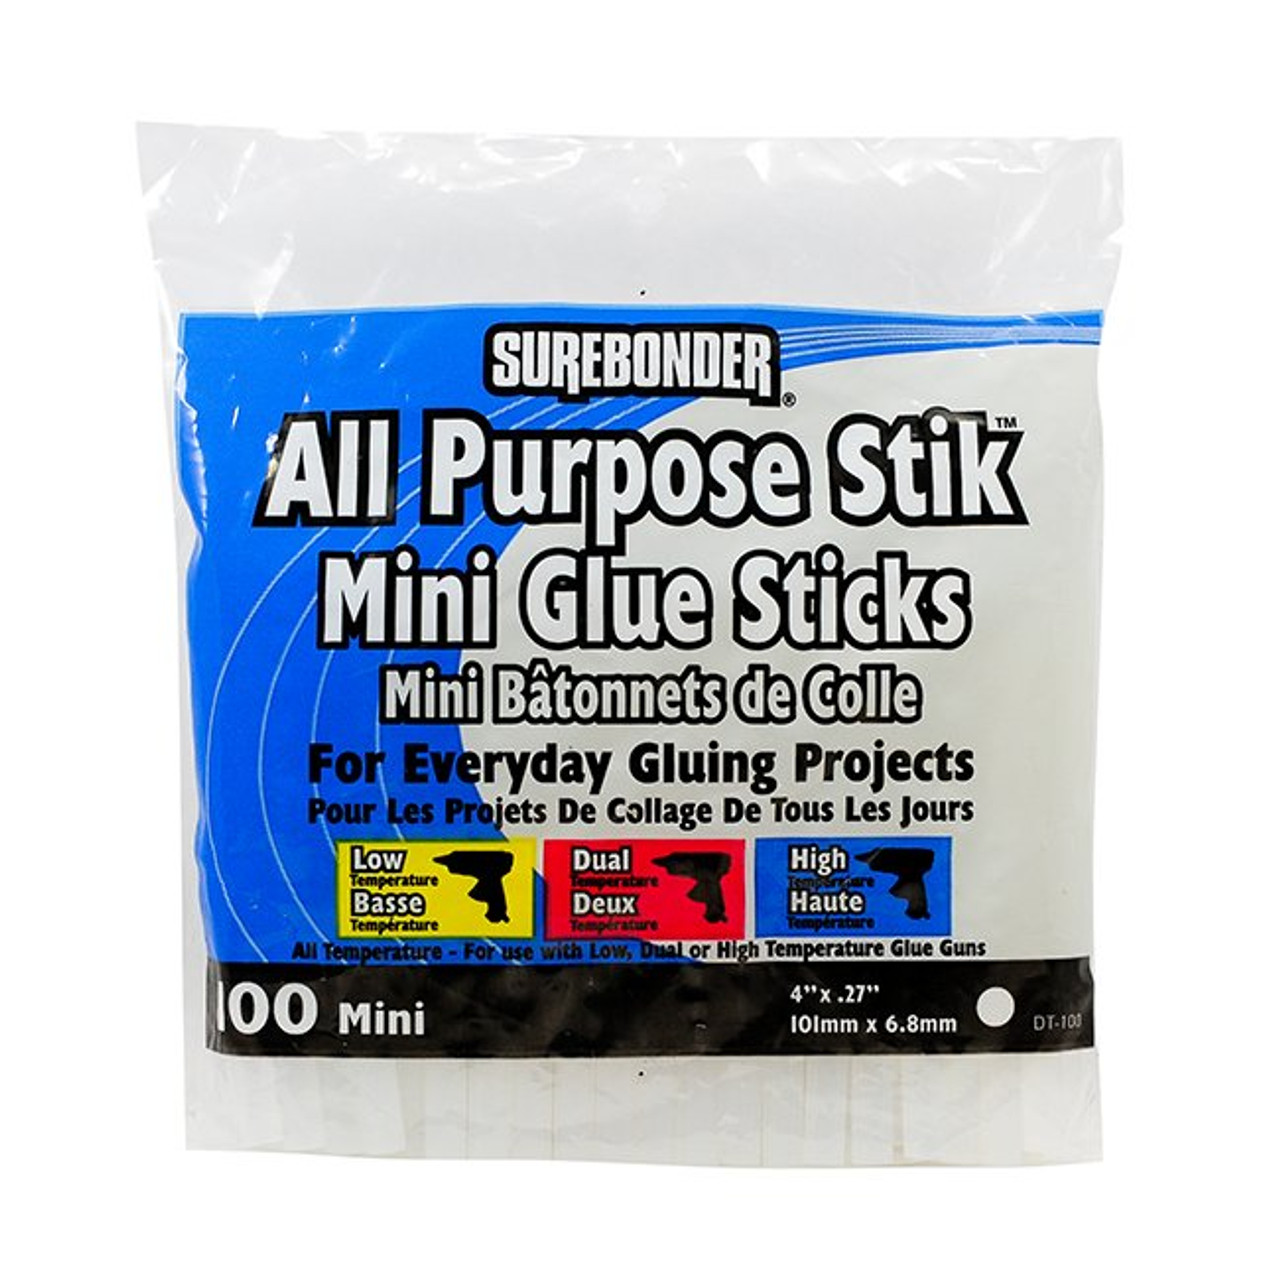 All Purpose Stik Mini Glue Sticks - 4